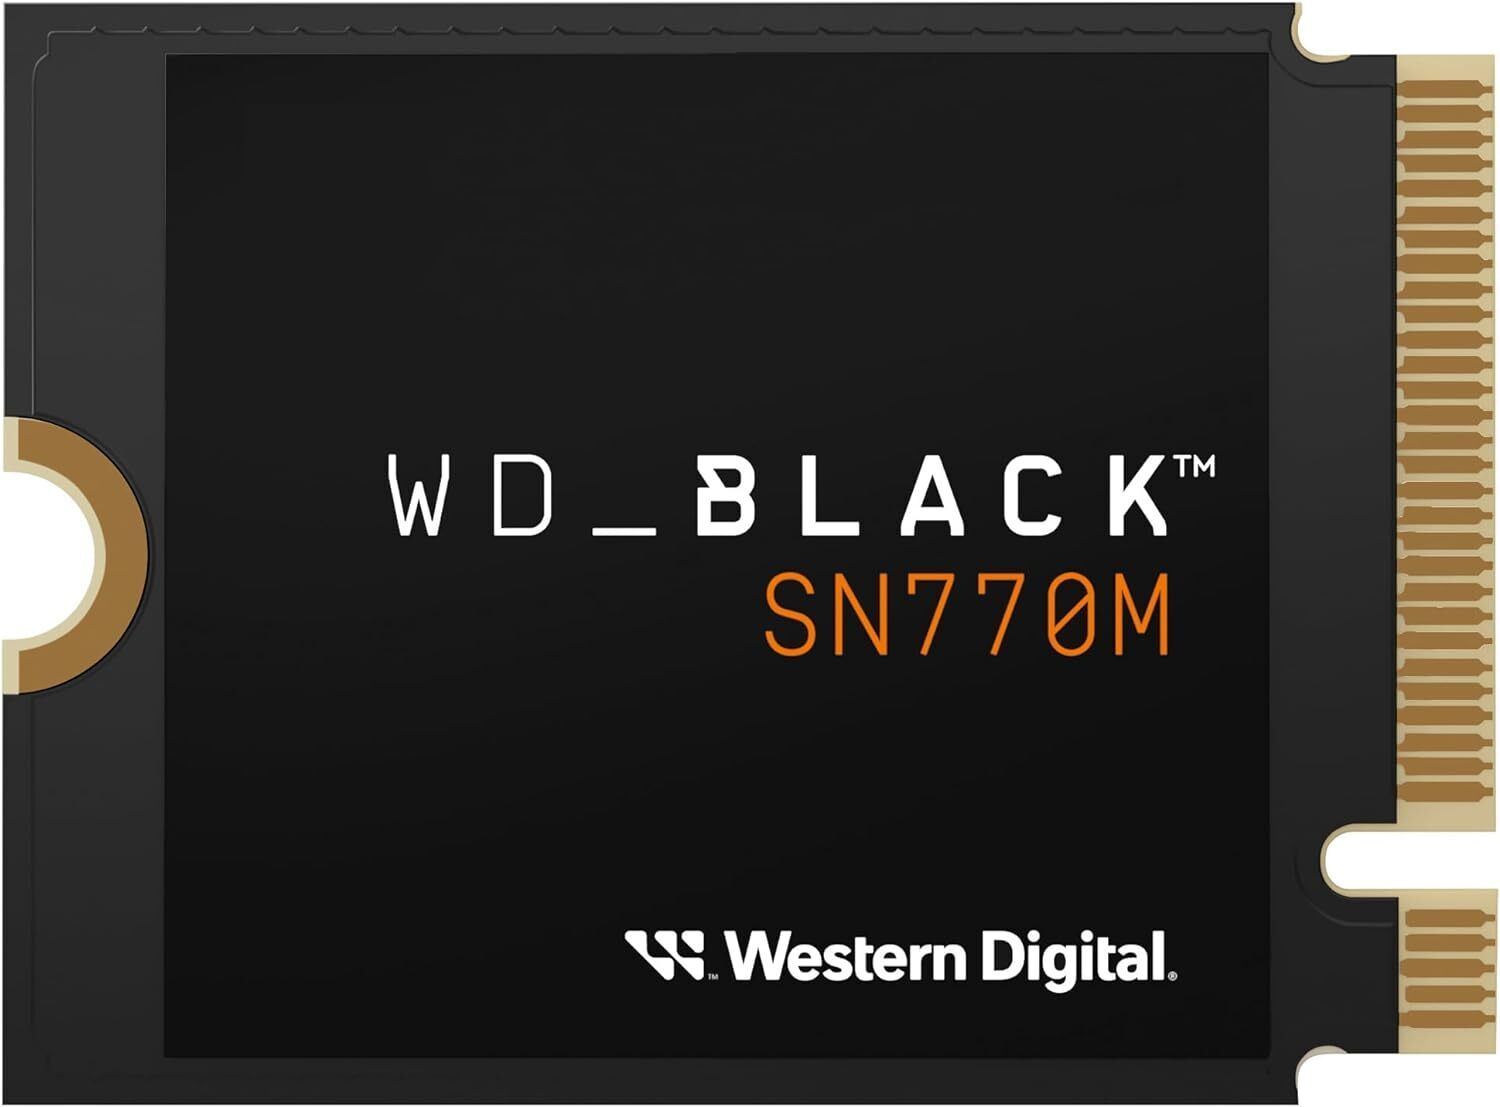 WD_BLACK 500GB SN770M M.2 2230 NVMe SSD for Handheld Gaming 500GB, Black 